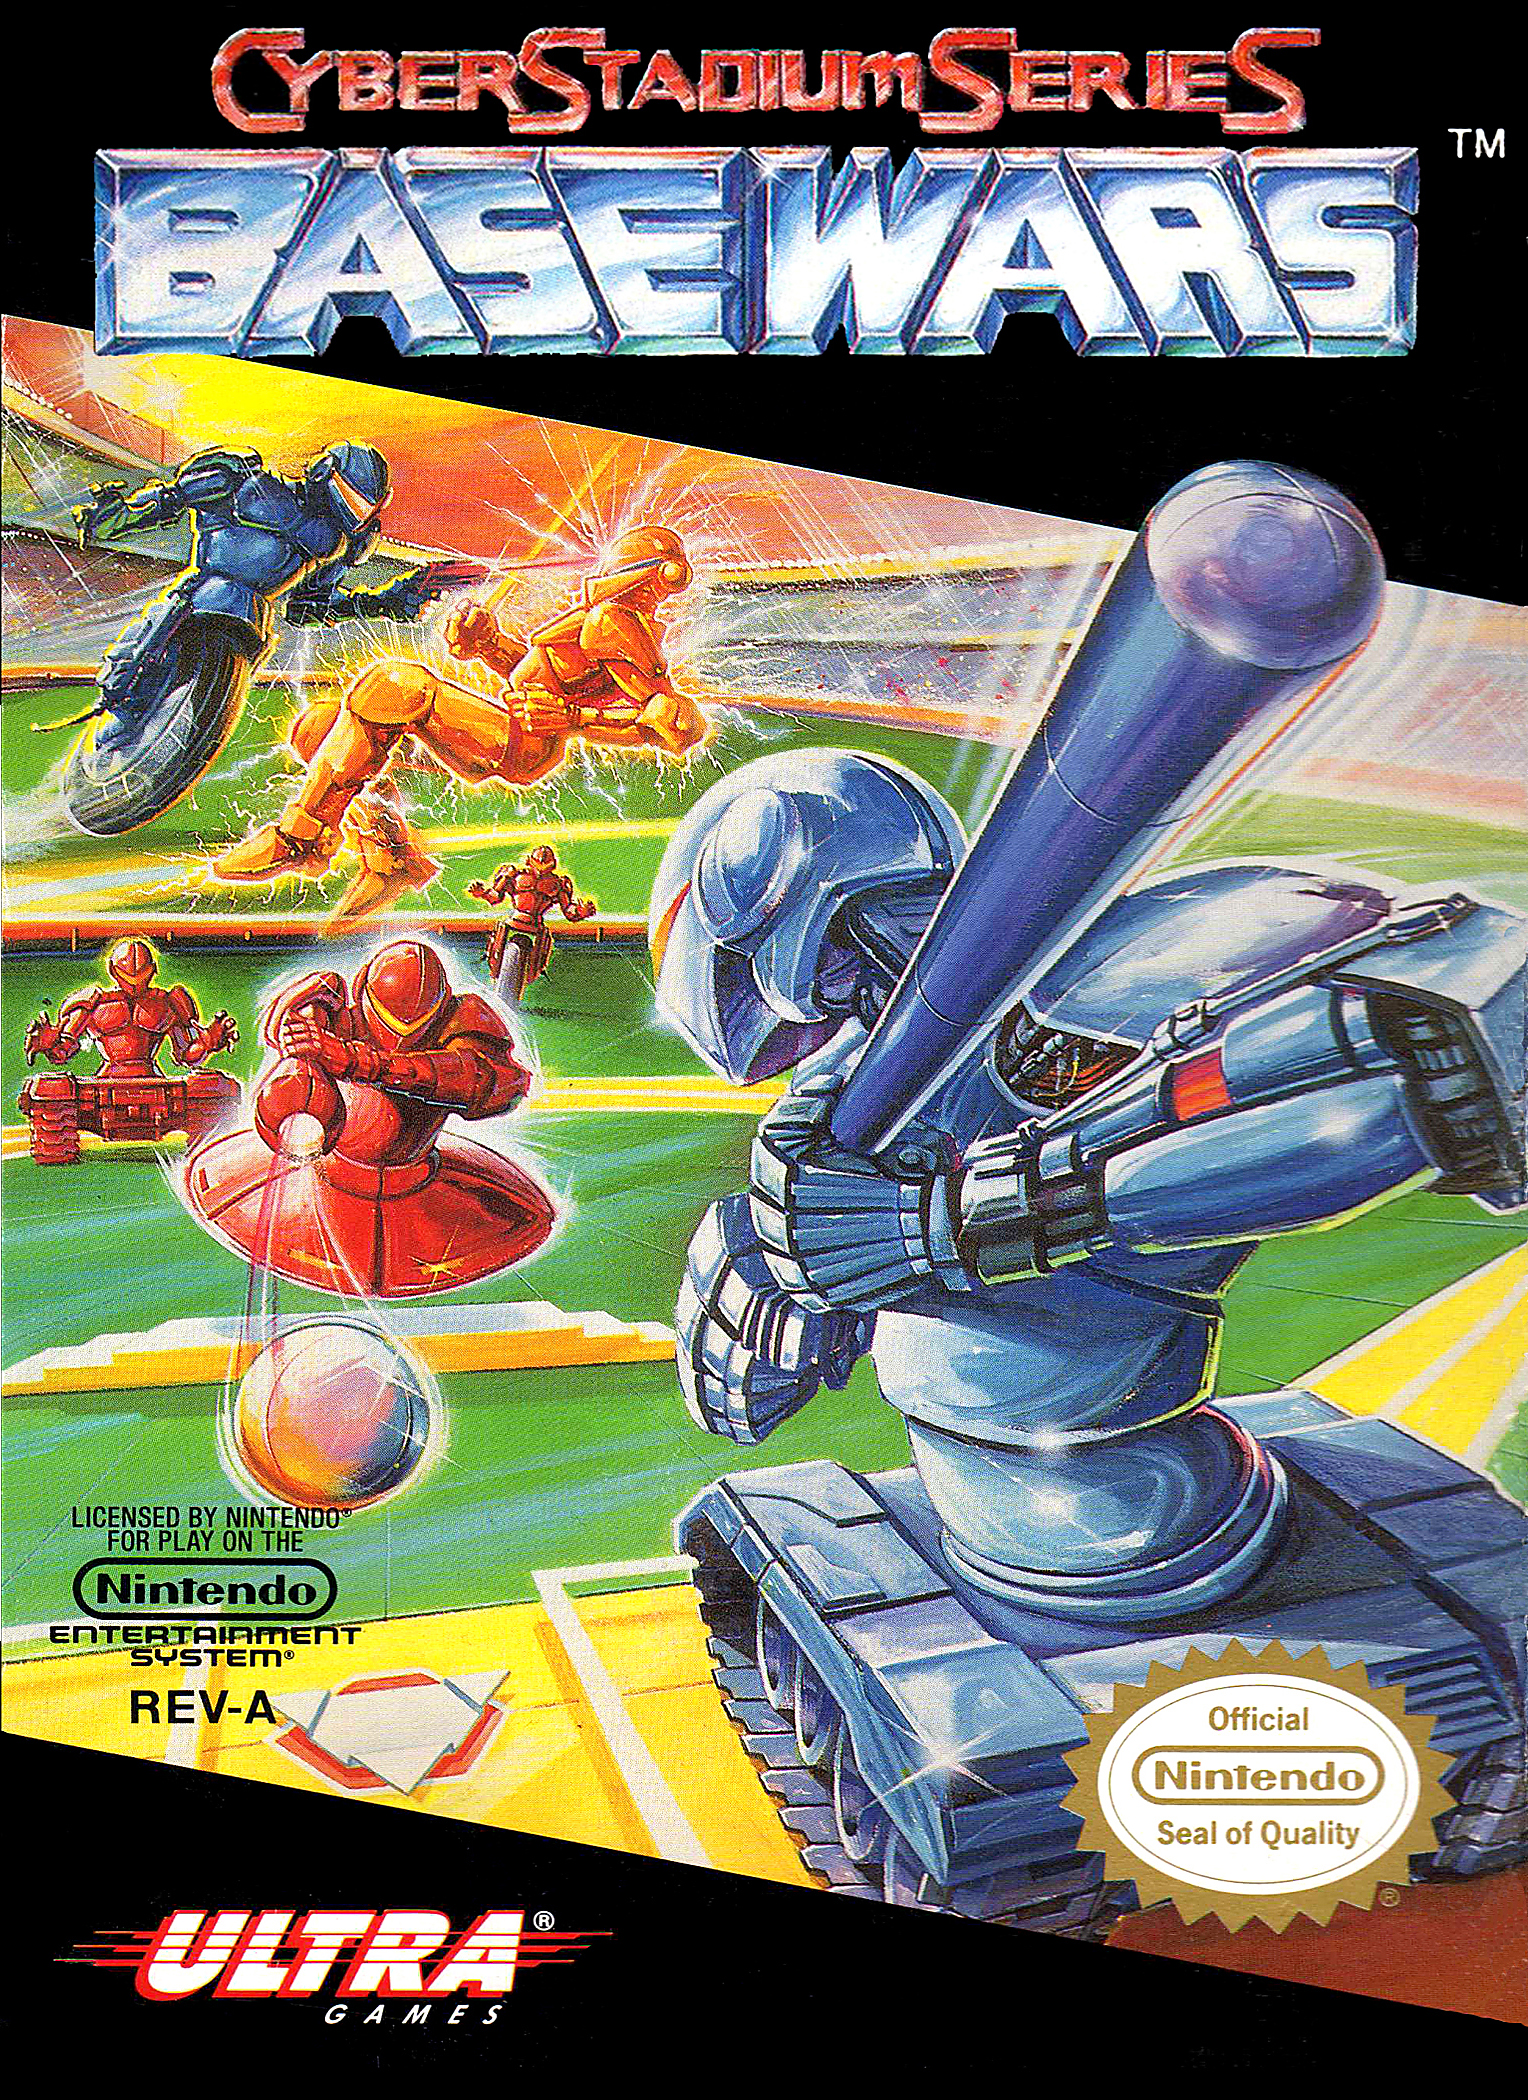 Cyberstadium Series Base Wars/NES